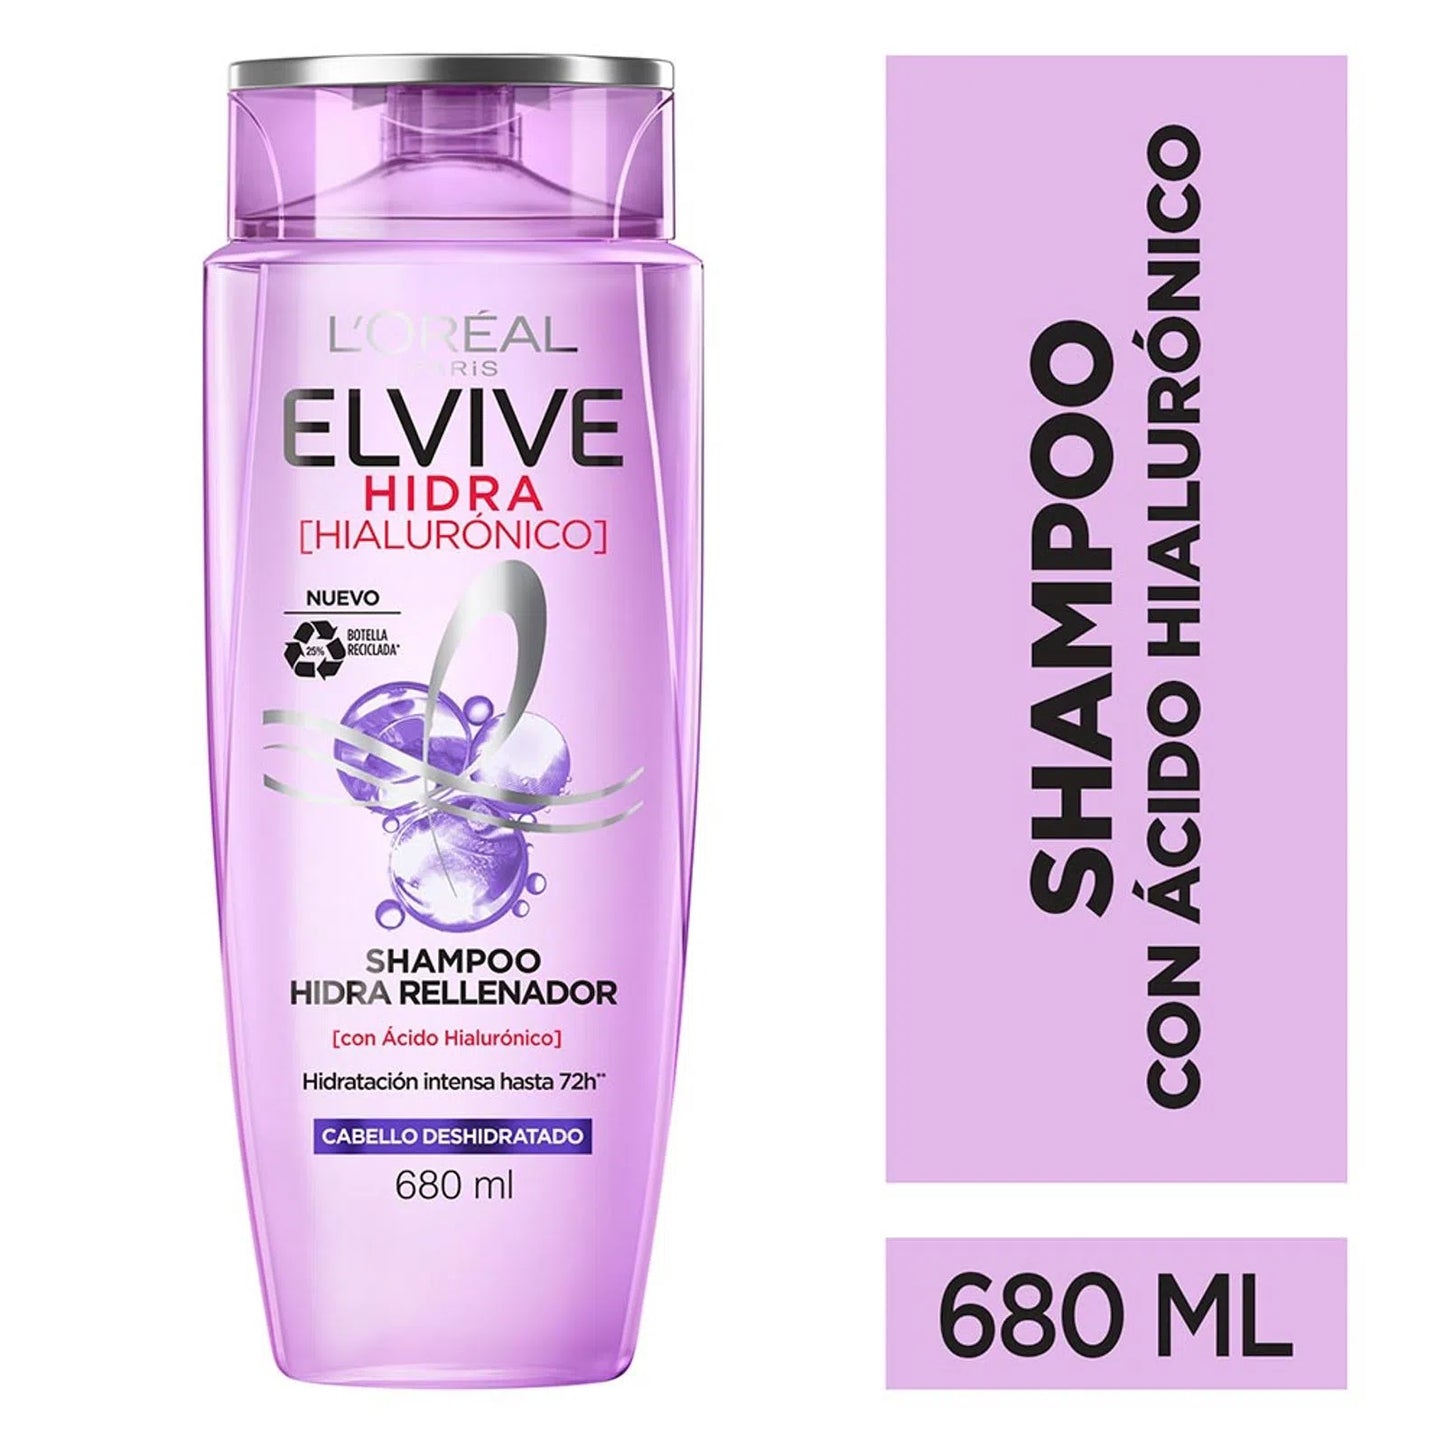 H5592500 - Shampoo Hidra Hialurónico 370 ml